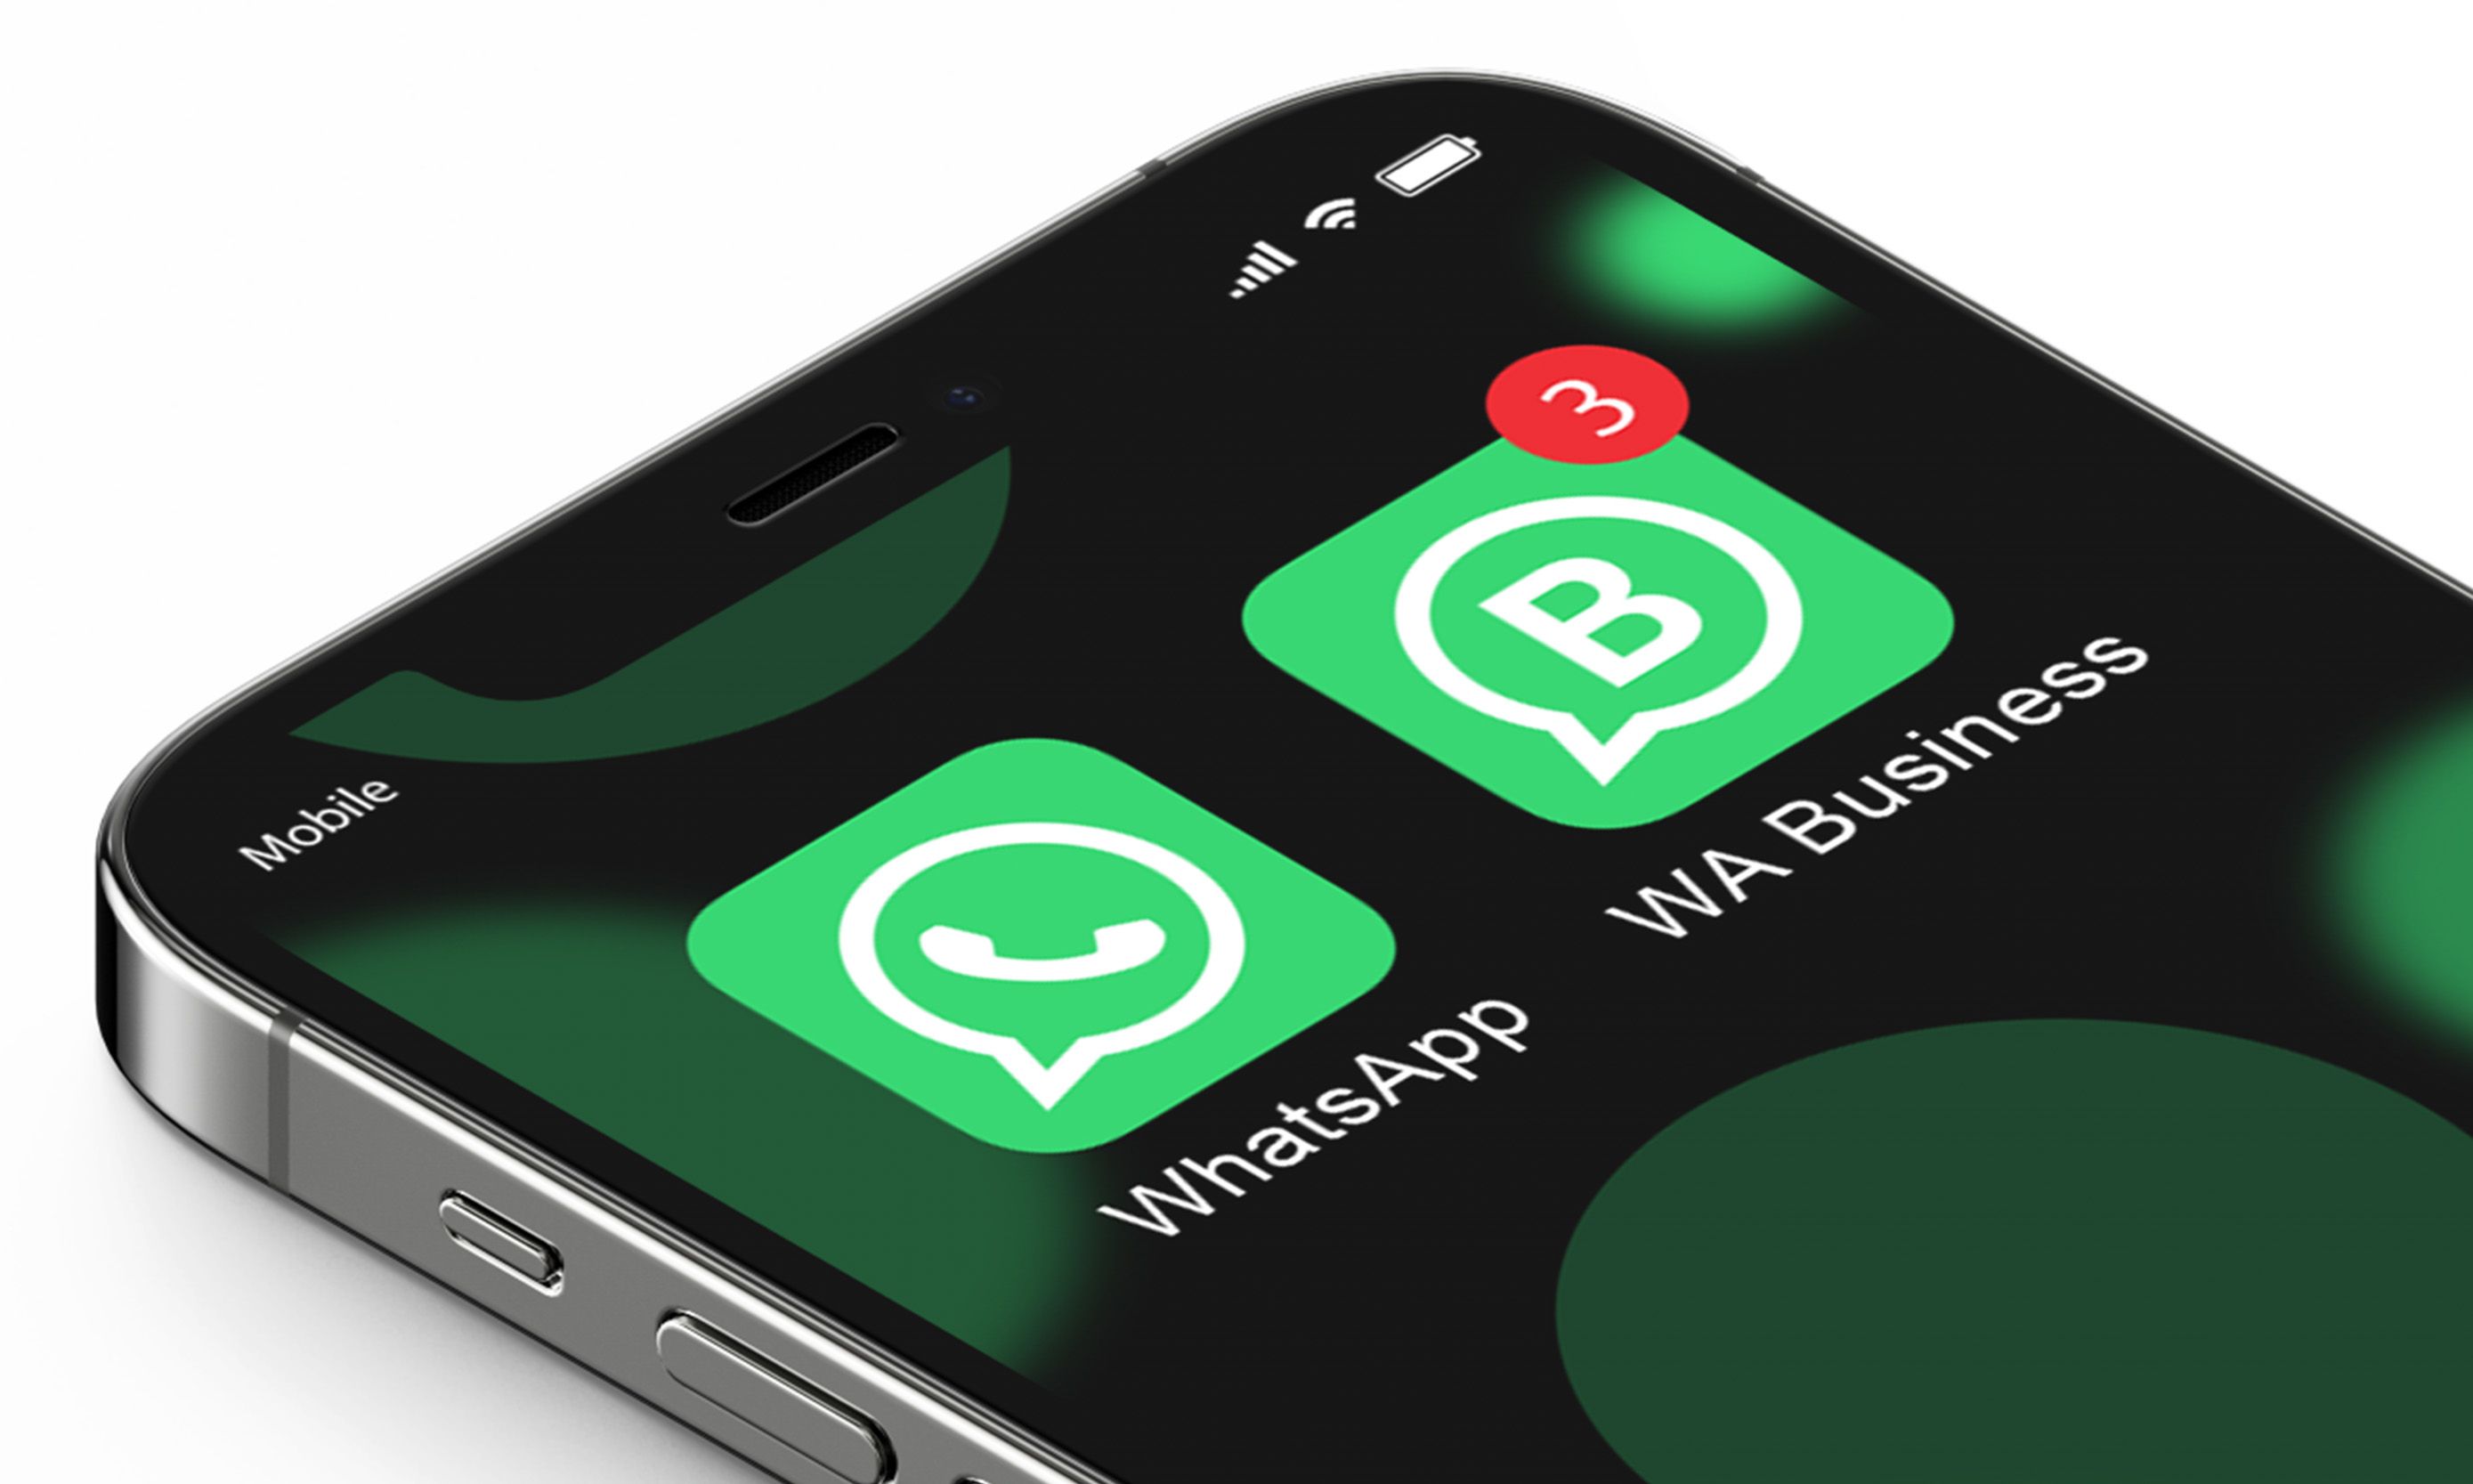 Benefits of Verified WhatsApp Business Account